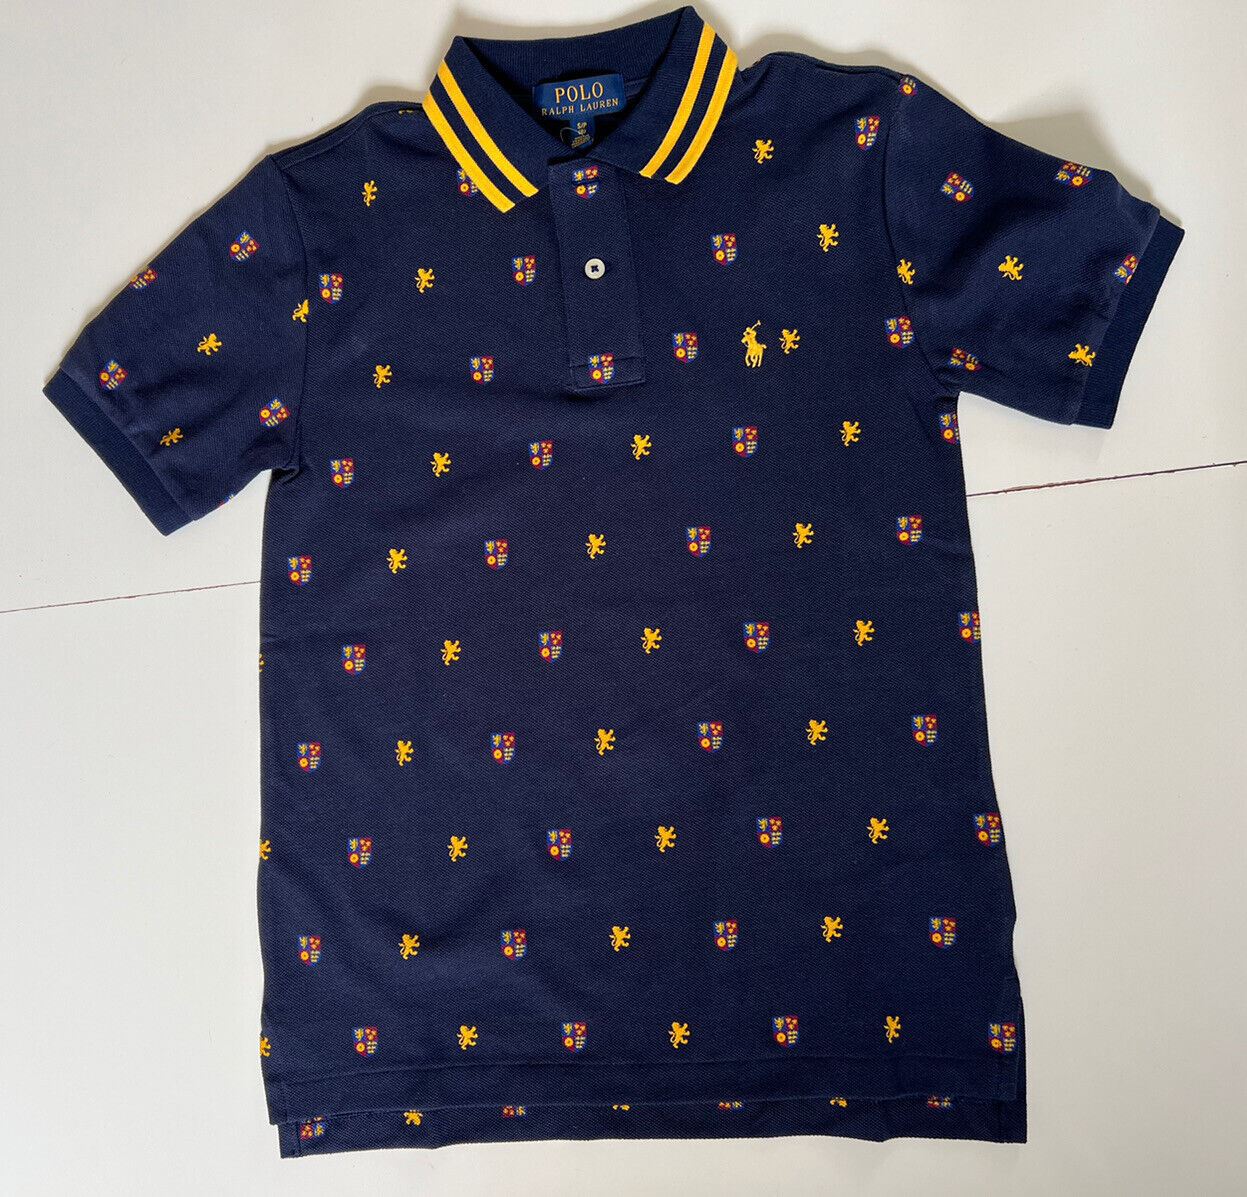 NWT Polo Ralph Lauren Boy's Polo Shirt Blue Small (8)